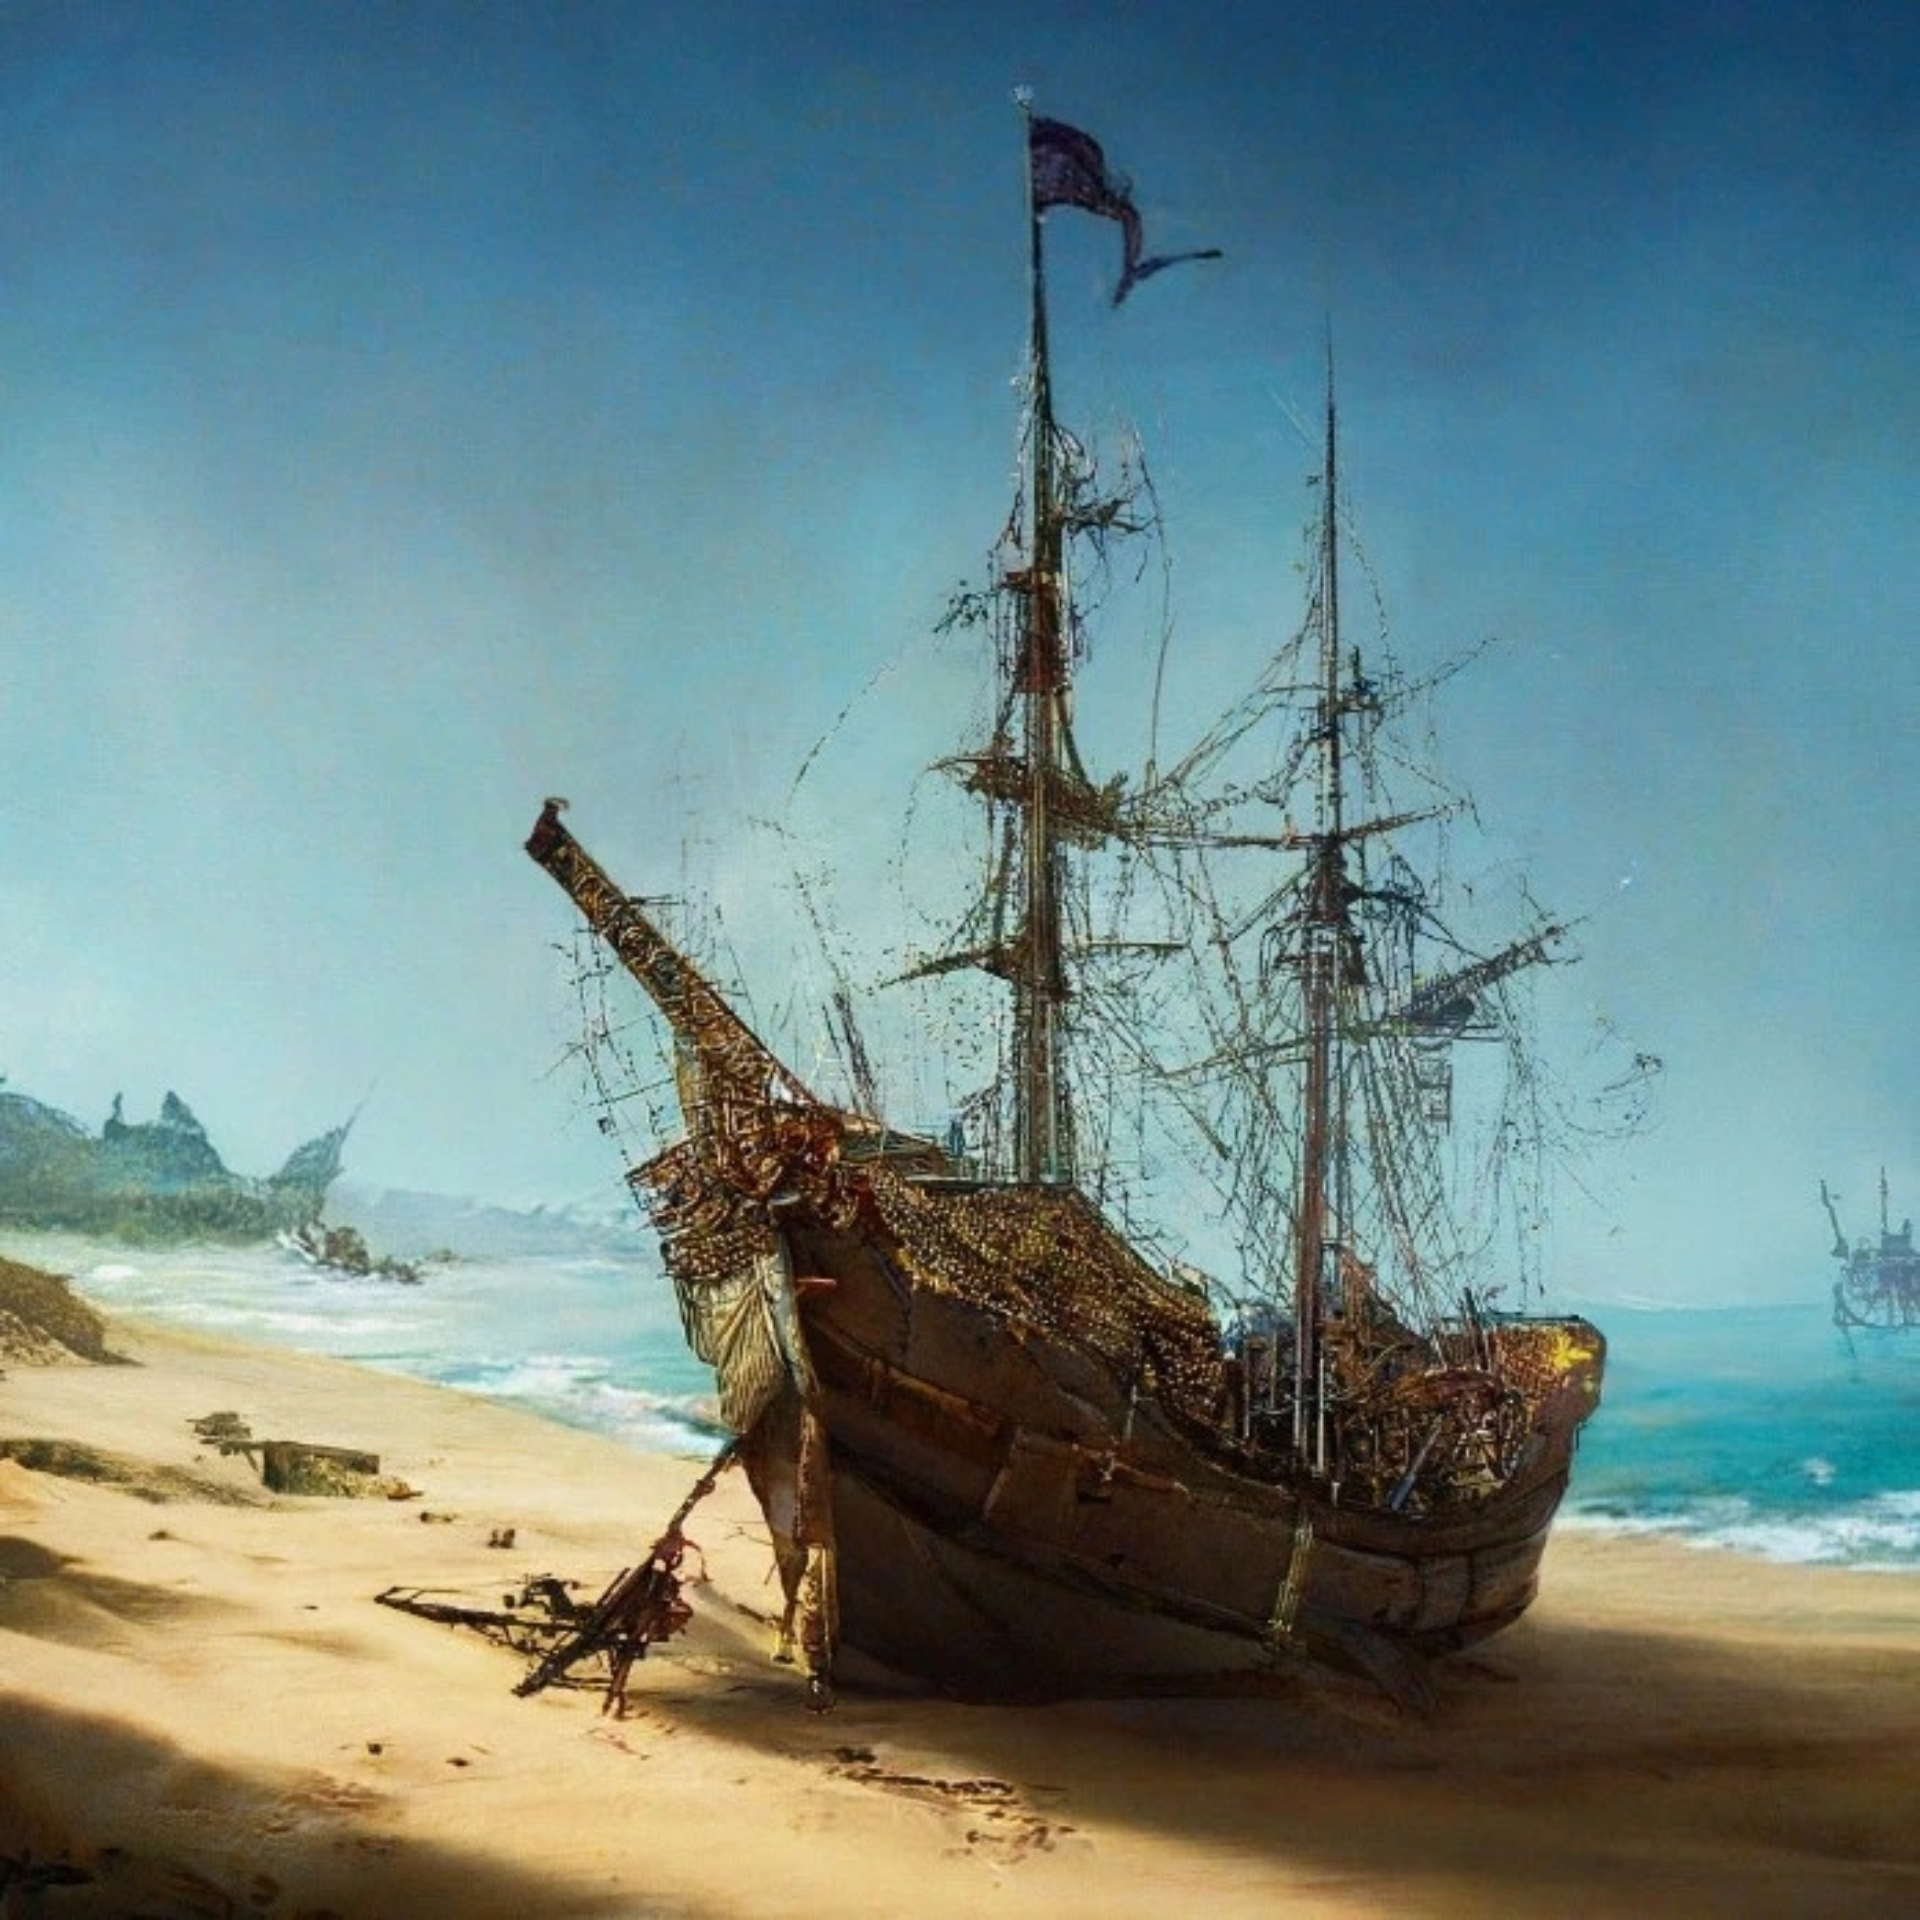 A stranded pirate ship